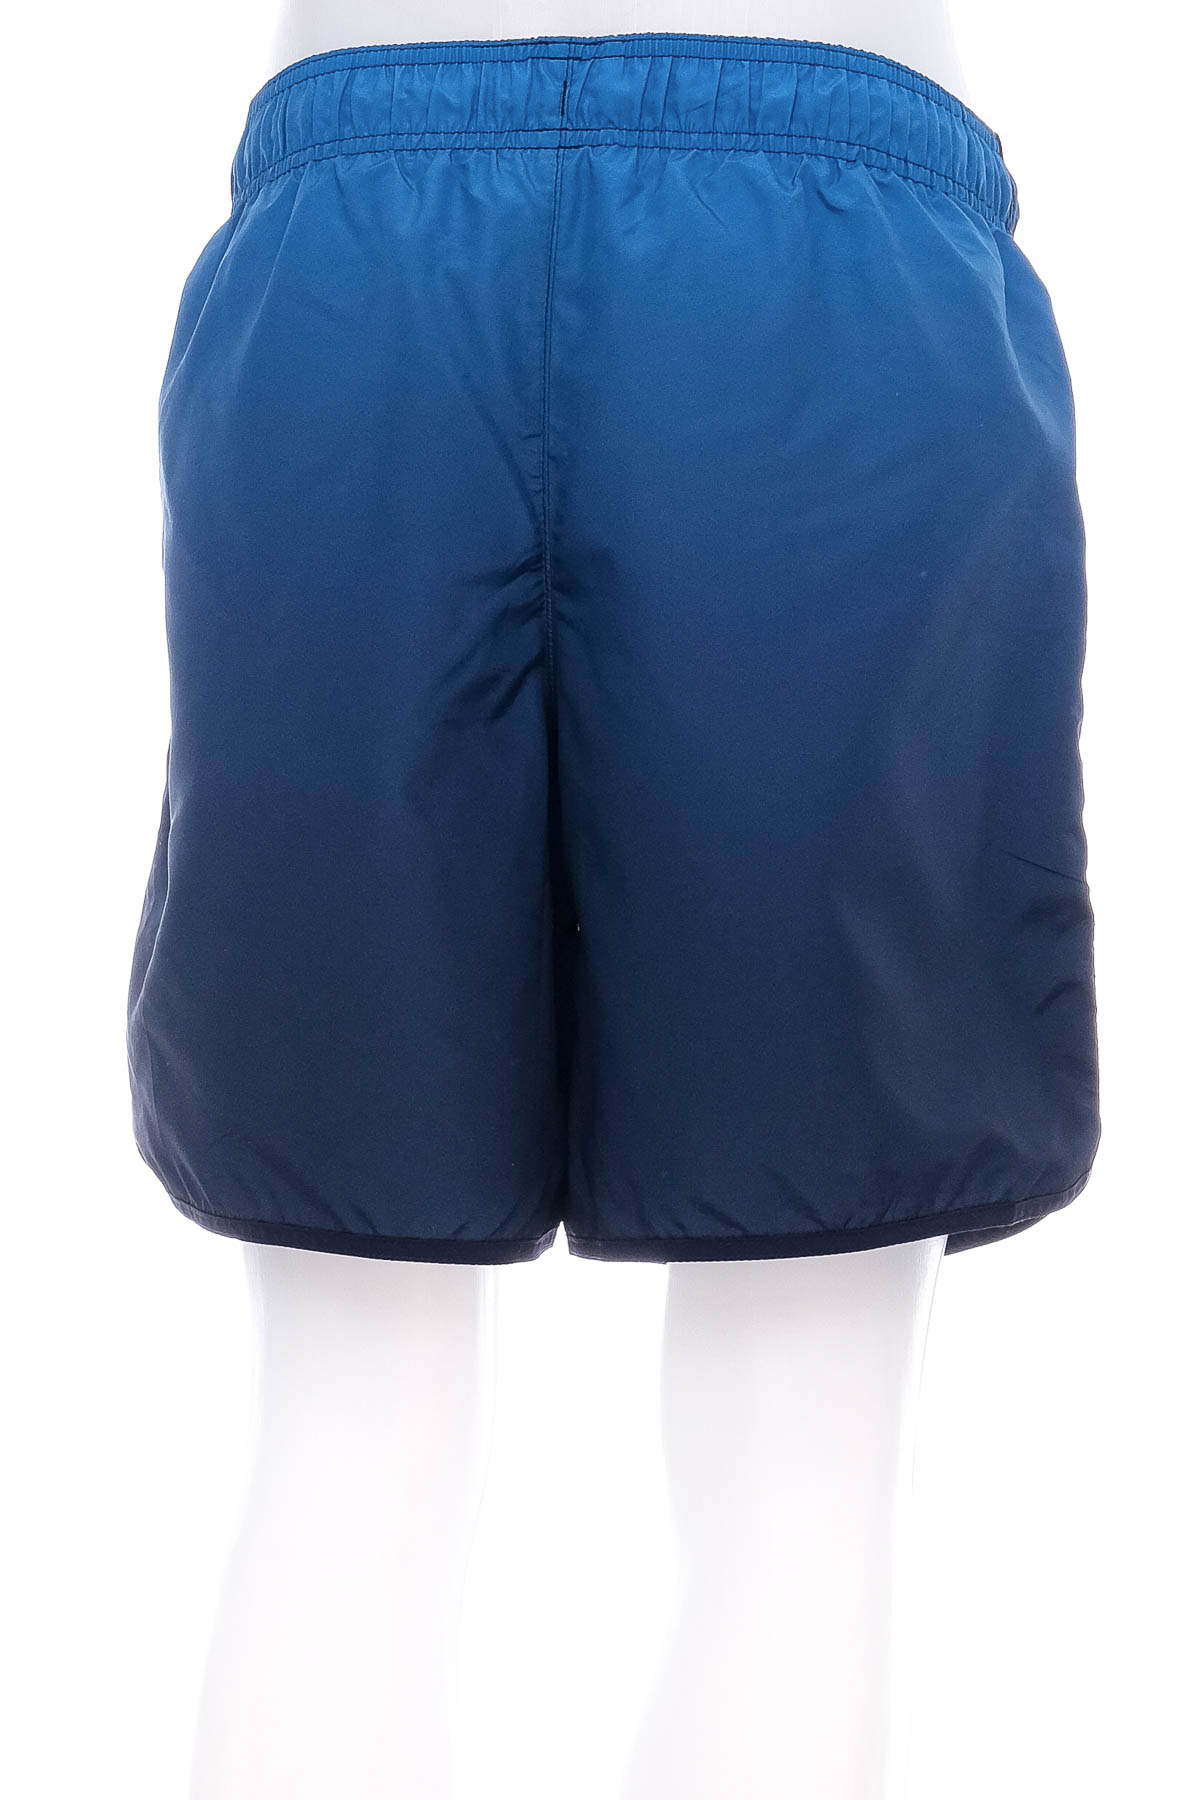 Boy's shorts - H&M - 1